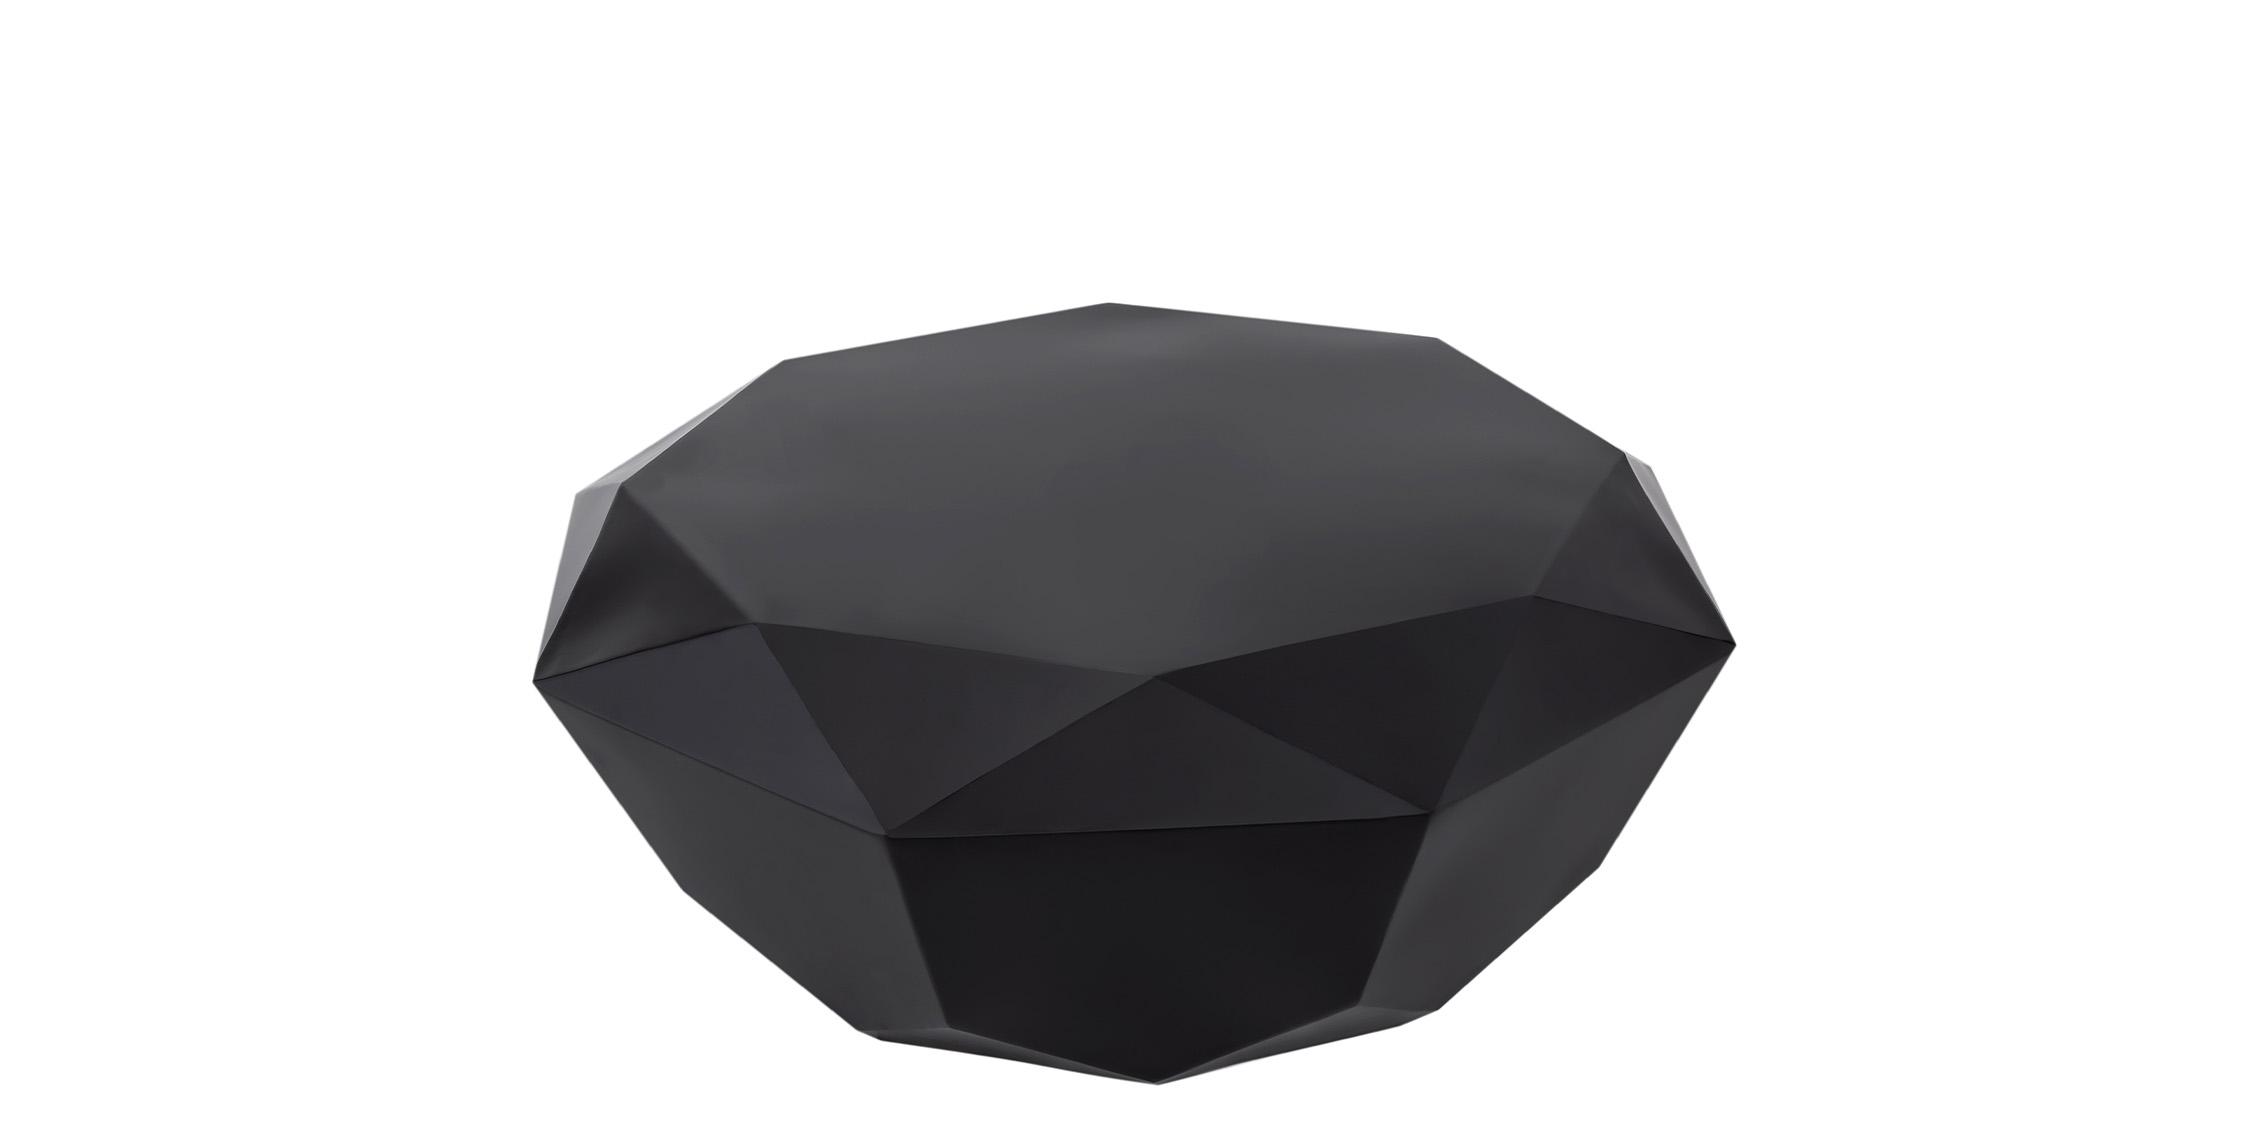 

    
Black Diamond Shape Coffee Table Gemma 222Black-C Meridian Modern Contemporary
